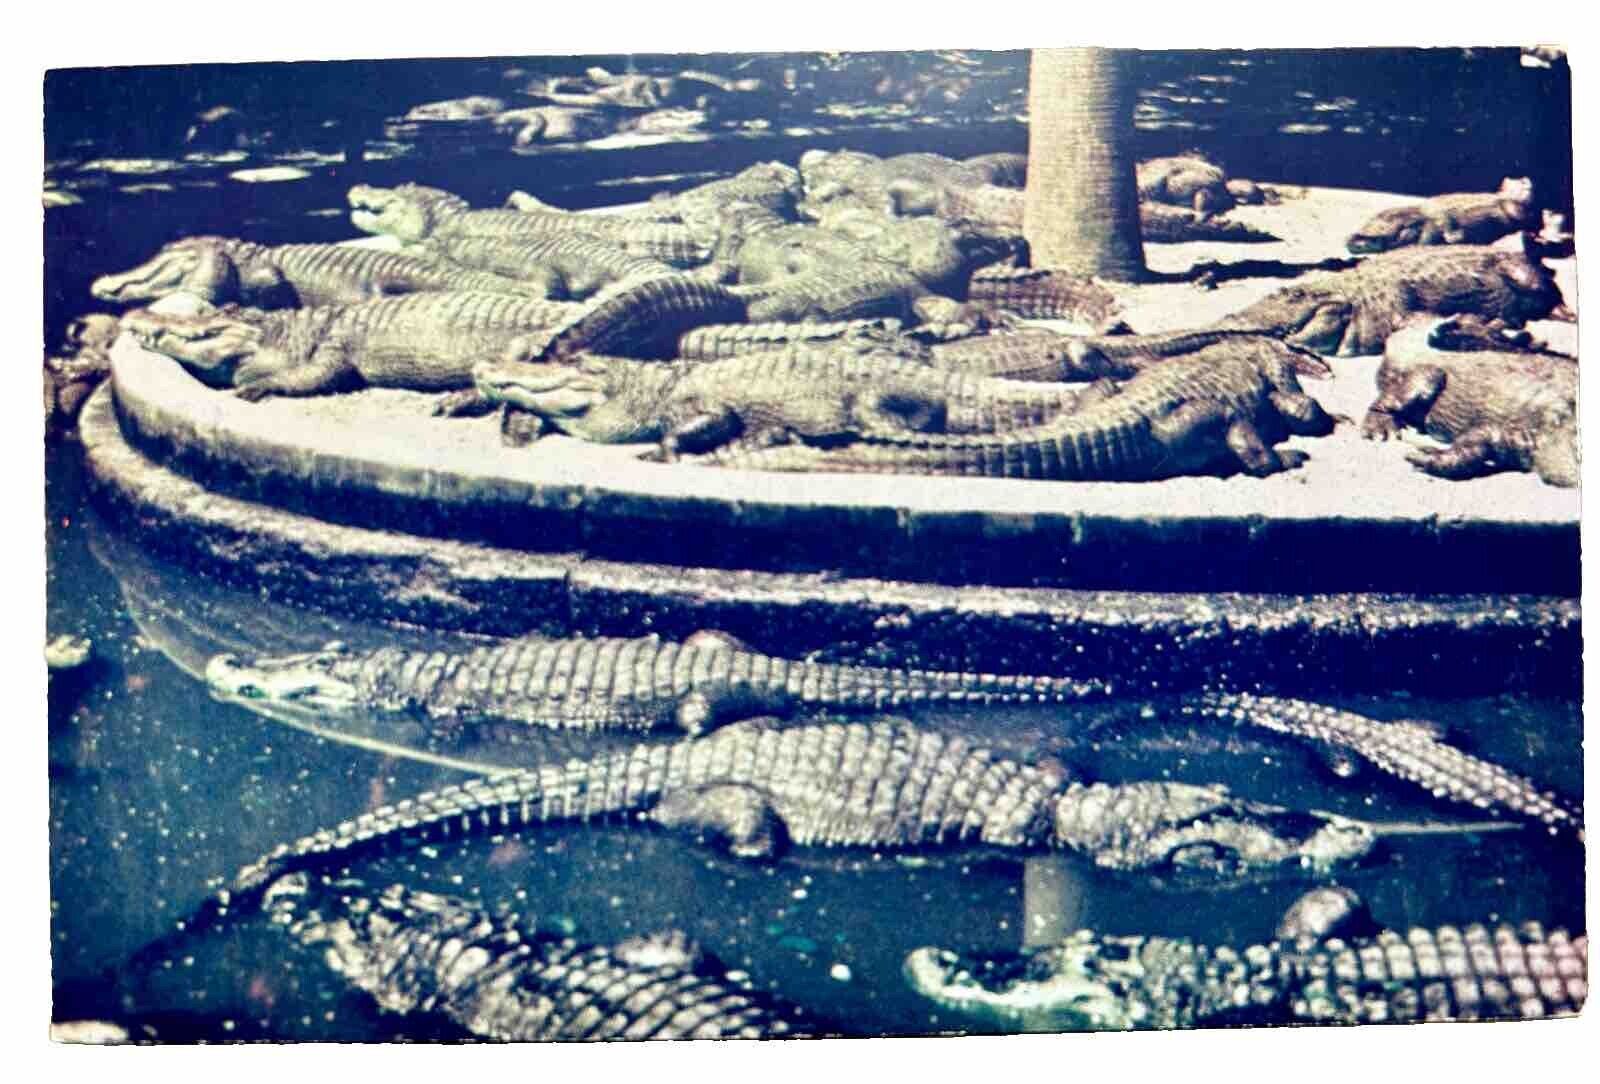 Famous Alligator Farm Saint Augustine Florida Postcard